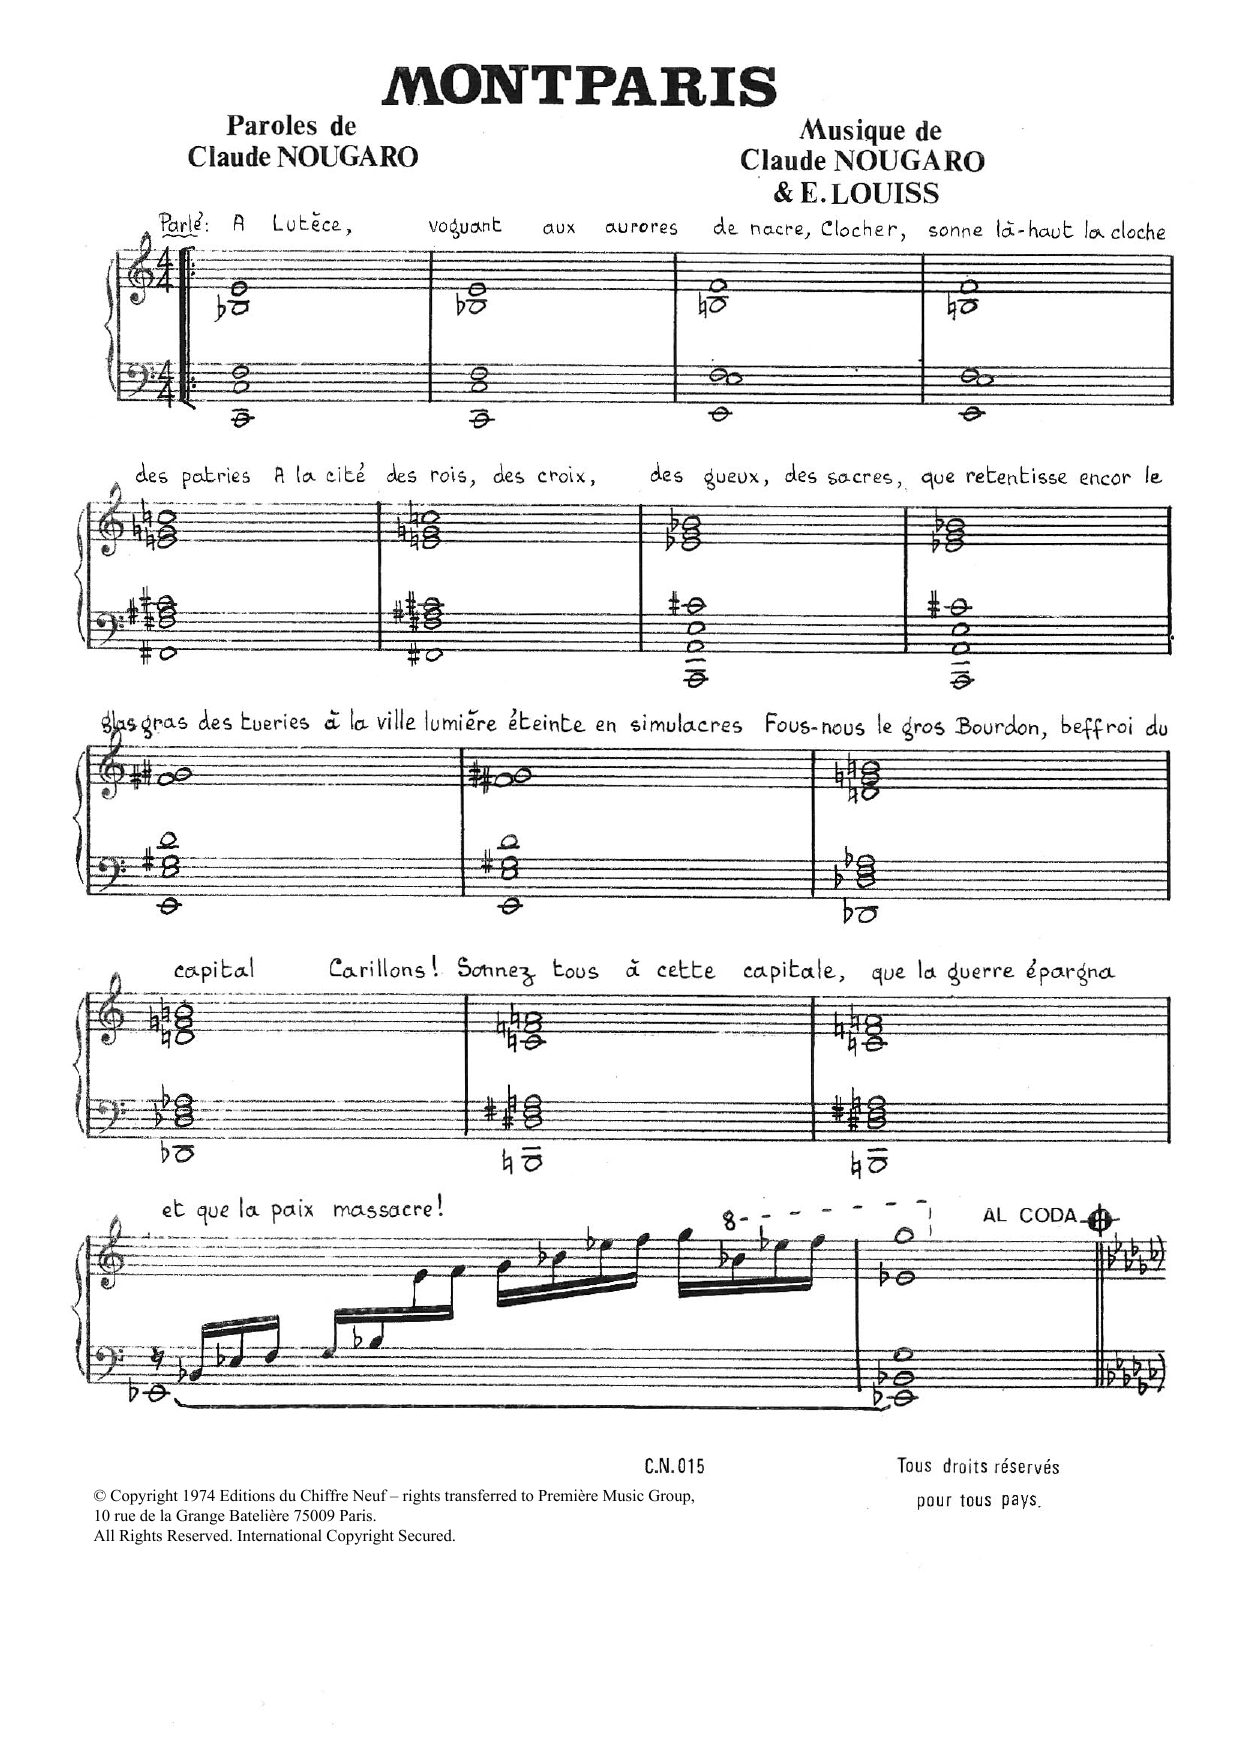 Claude Nougaro Montparis Sheet Music Notes & Chords for Piano & Vocal - Download or Print PDF